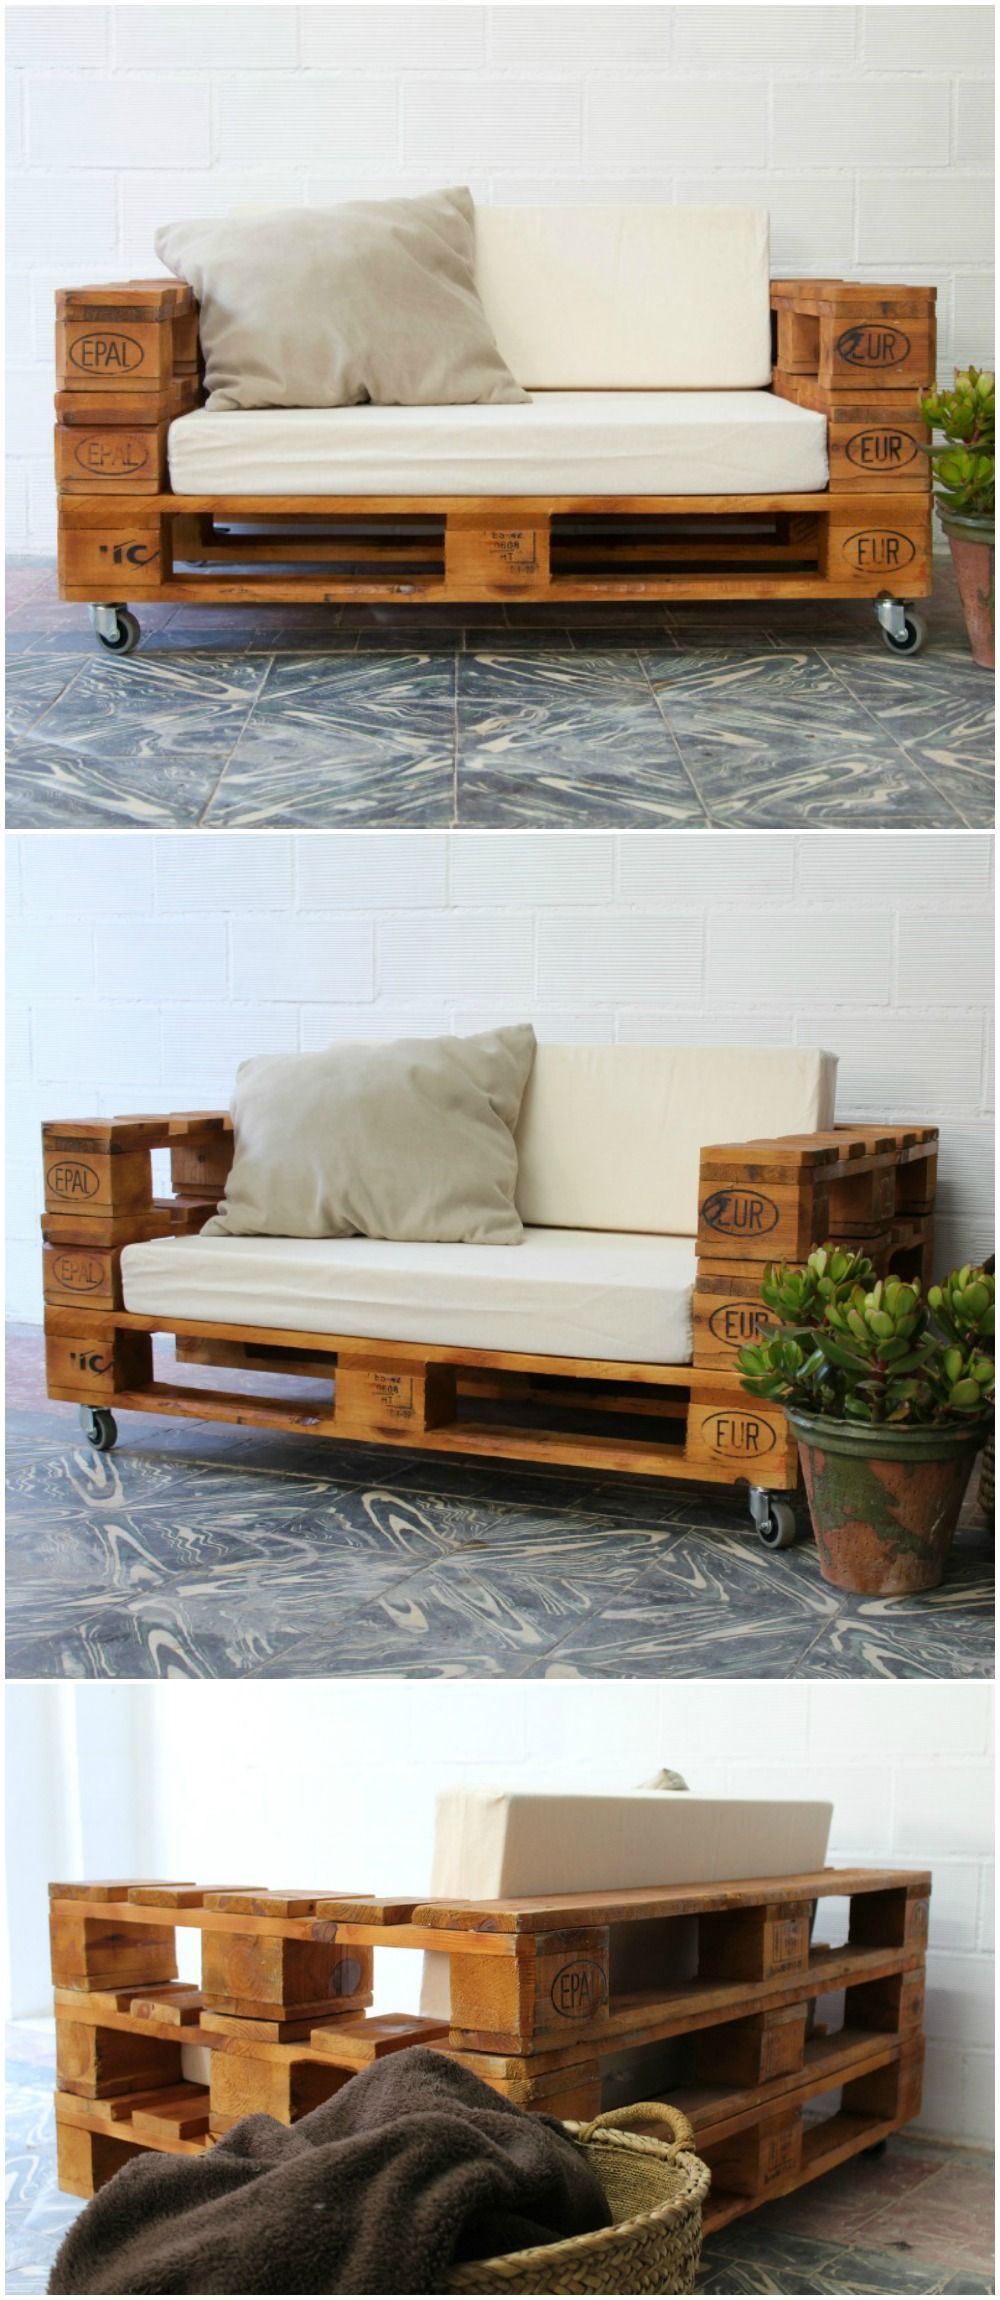 ALMANZOR sof? palets. 120x80cm -   22 pallet garden couch
 ideas